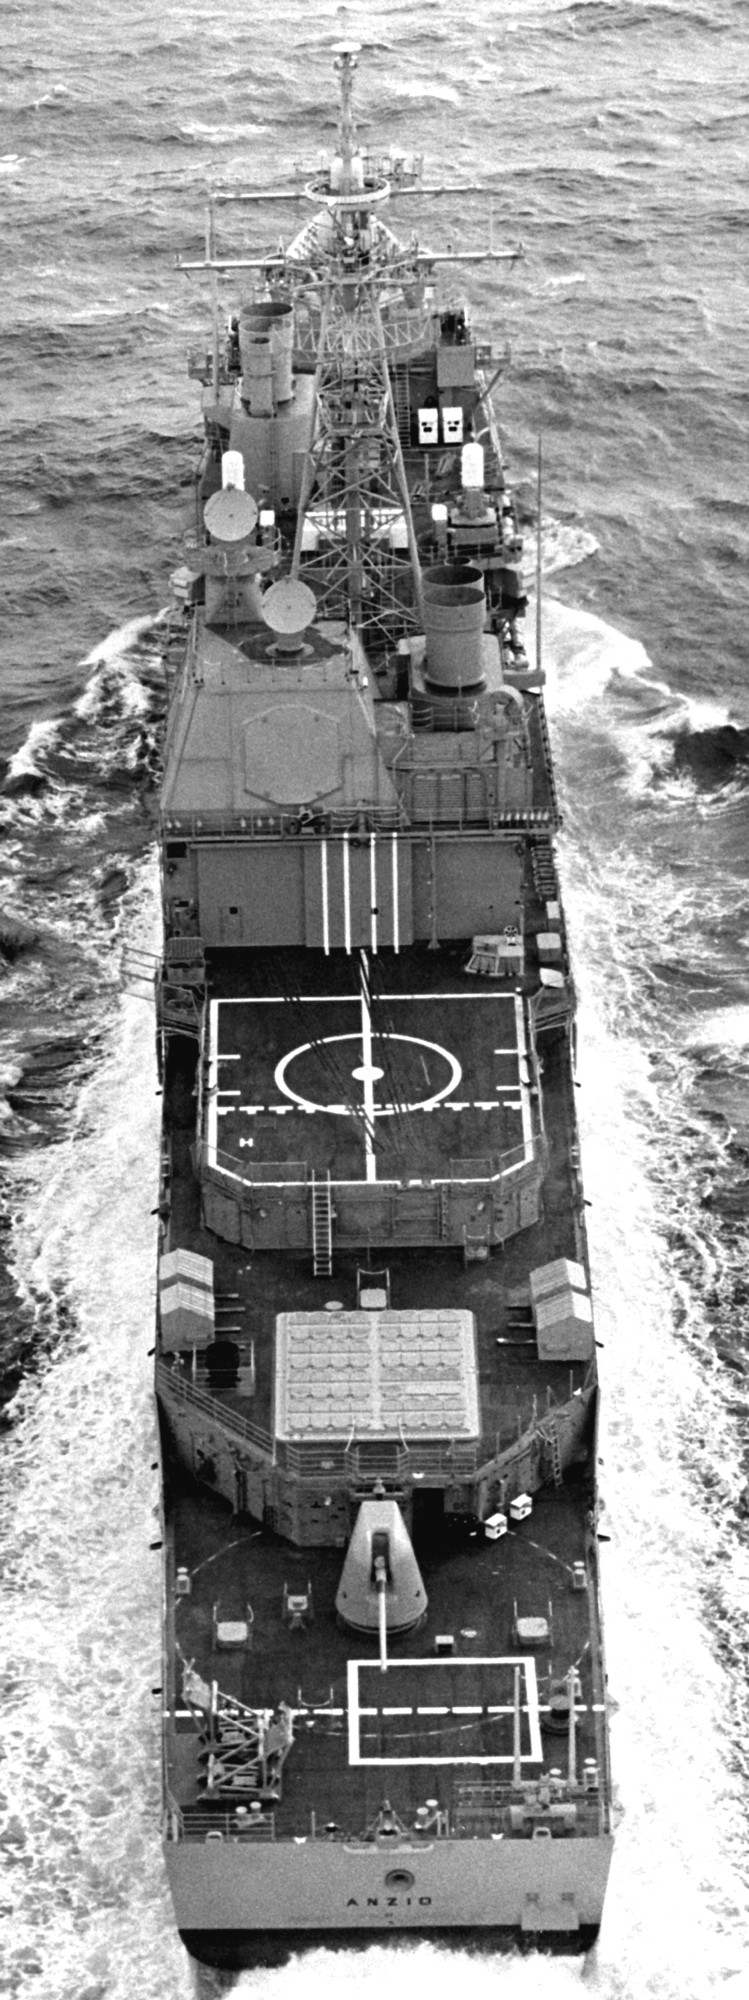 cg-68 uss anzio ticonderoga class guided missile cruiser aegis us navy sea trials 60